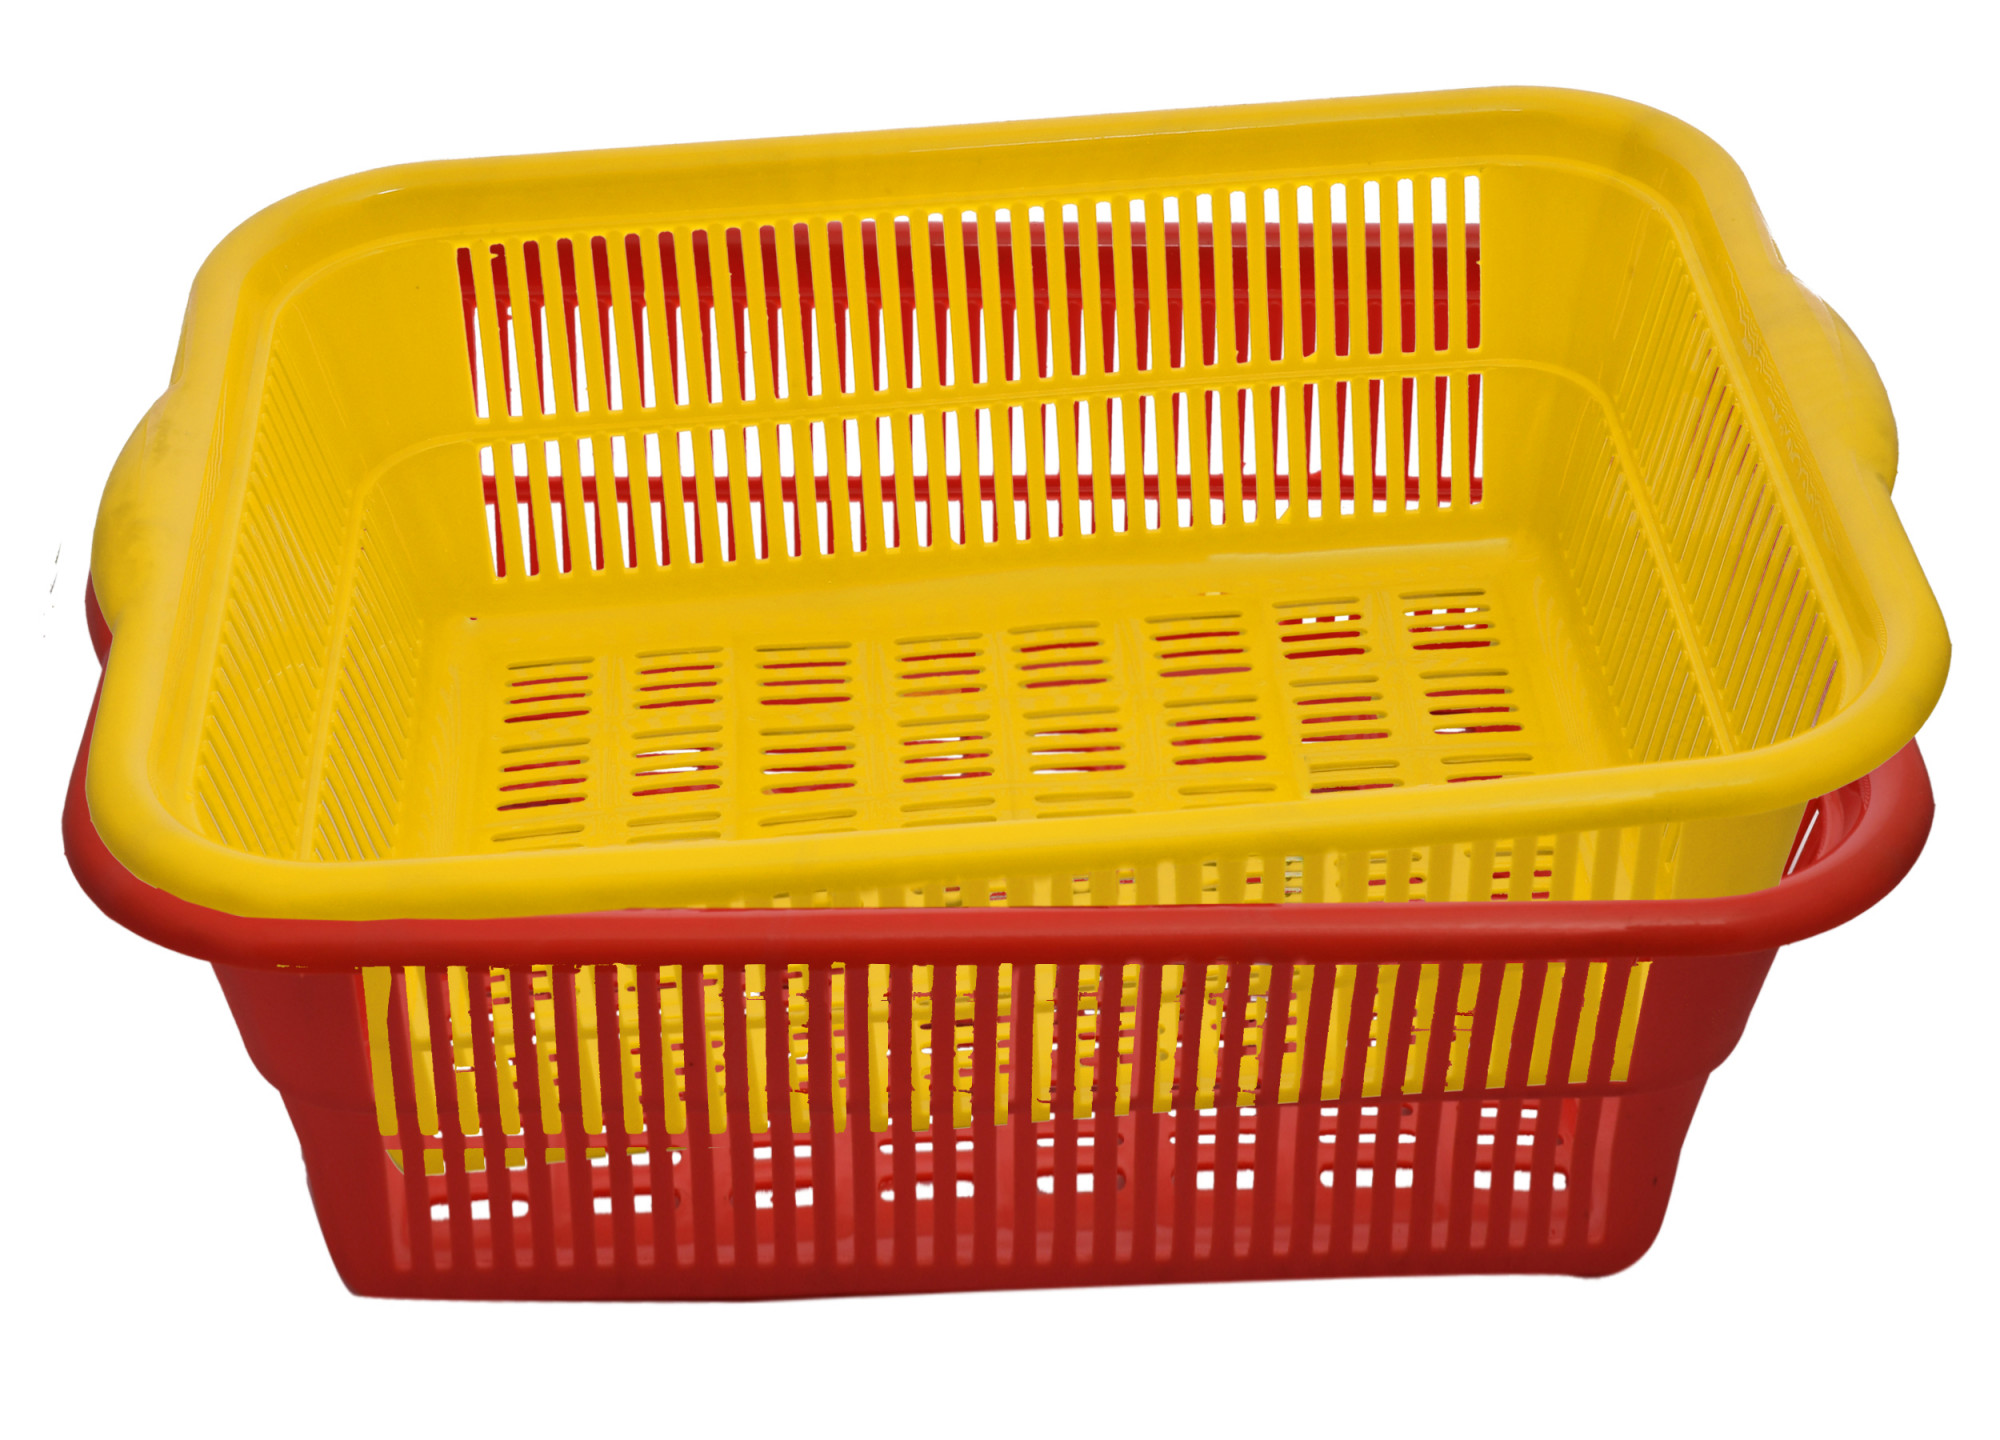 Kuber Industries Plastic Kitchen Small Size Dish Rack Drainer Vegetables And Fruits Washing Basket Dish Rack Multipurpose Organizers (Red & Yellow)-KUBMART616